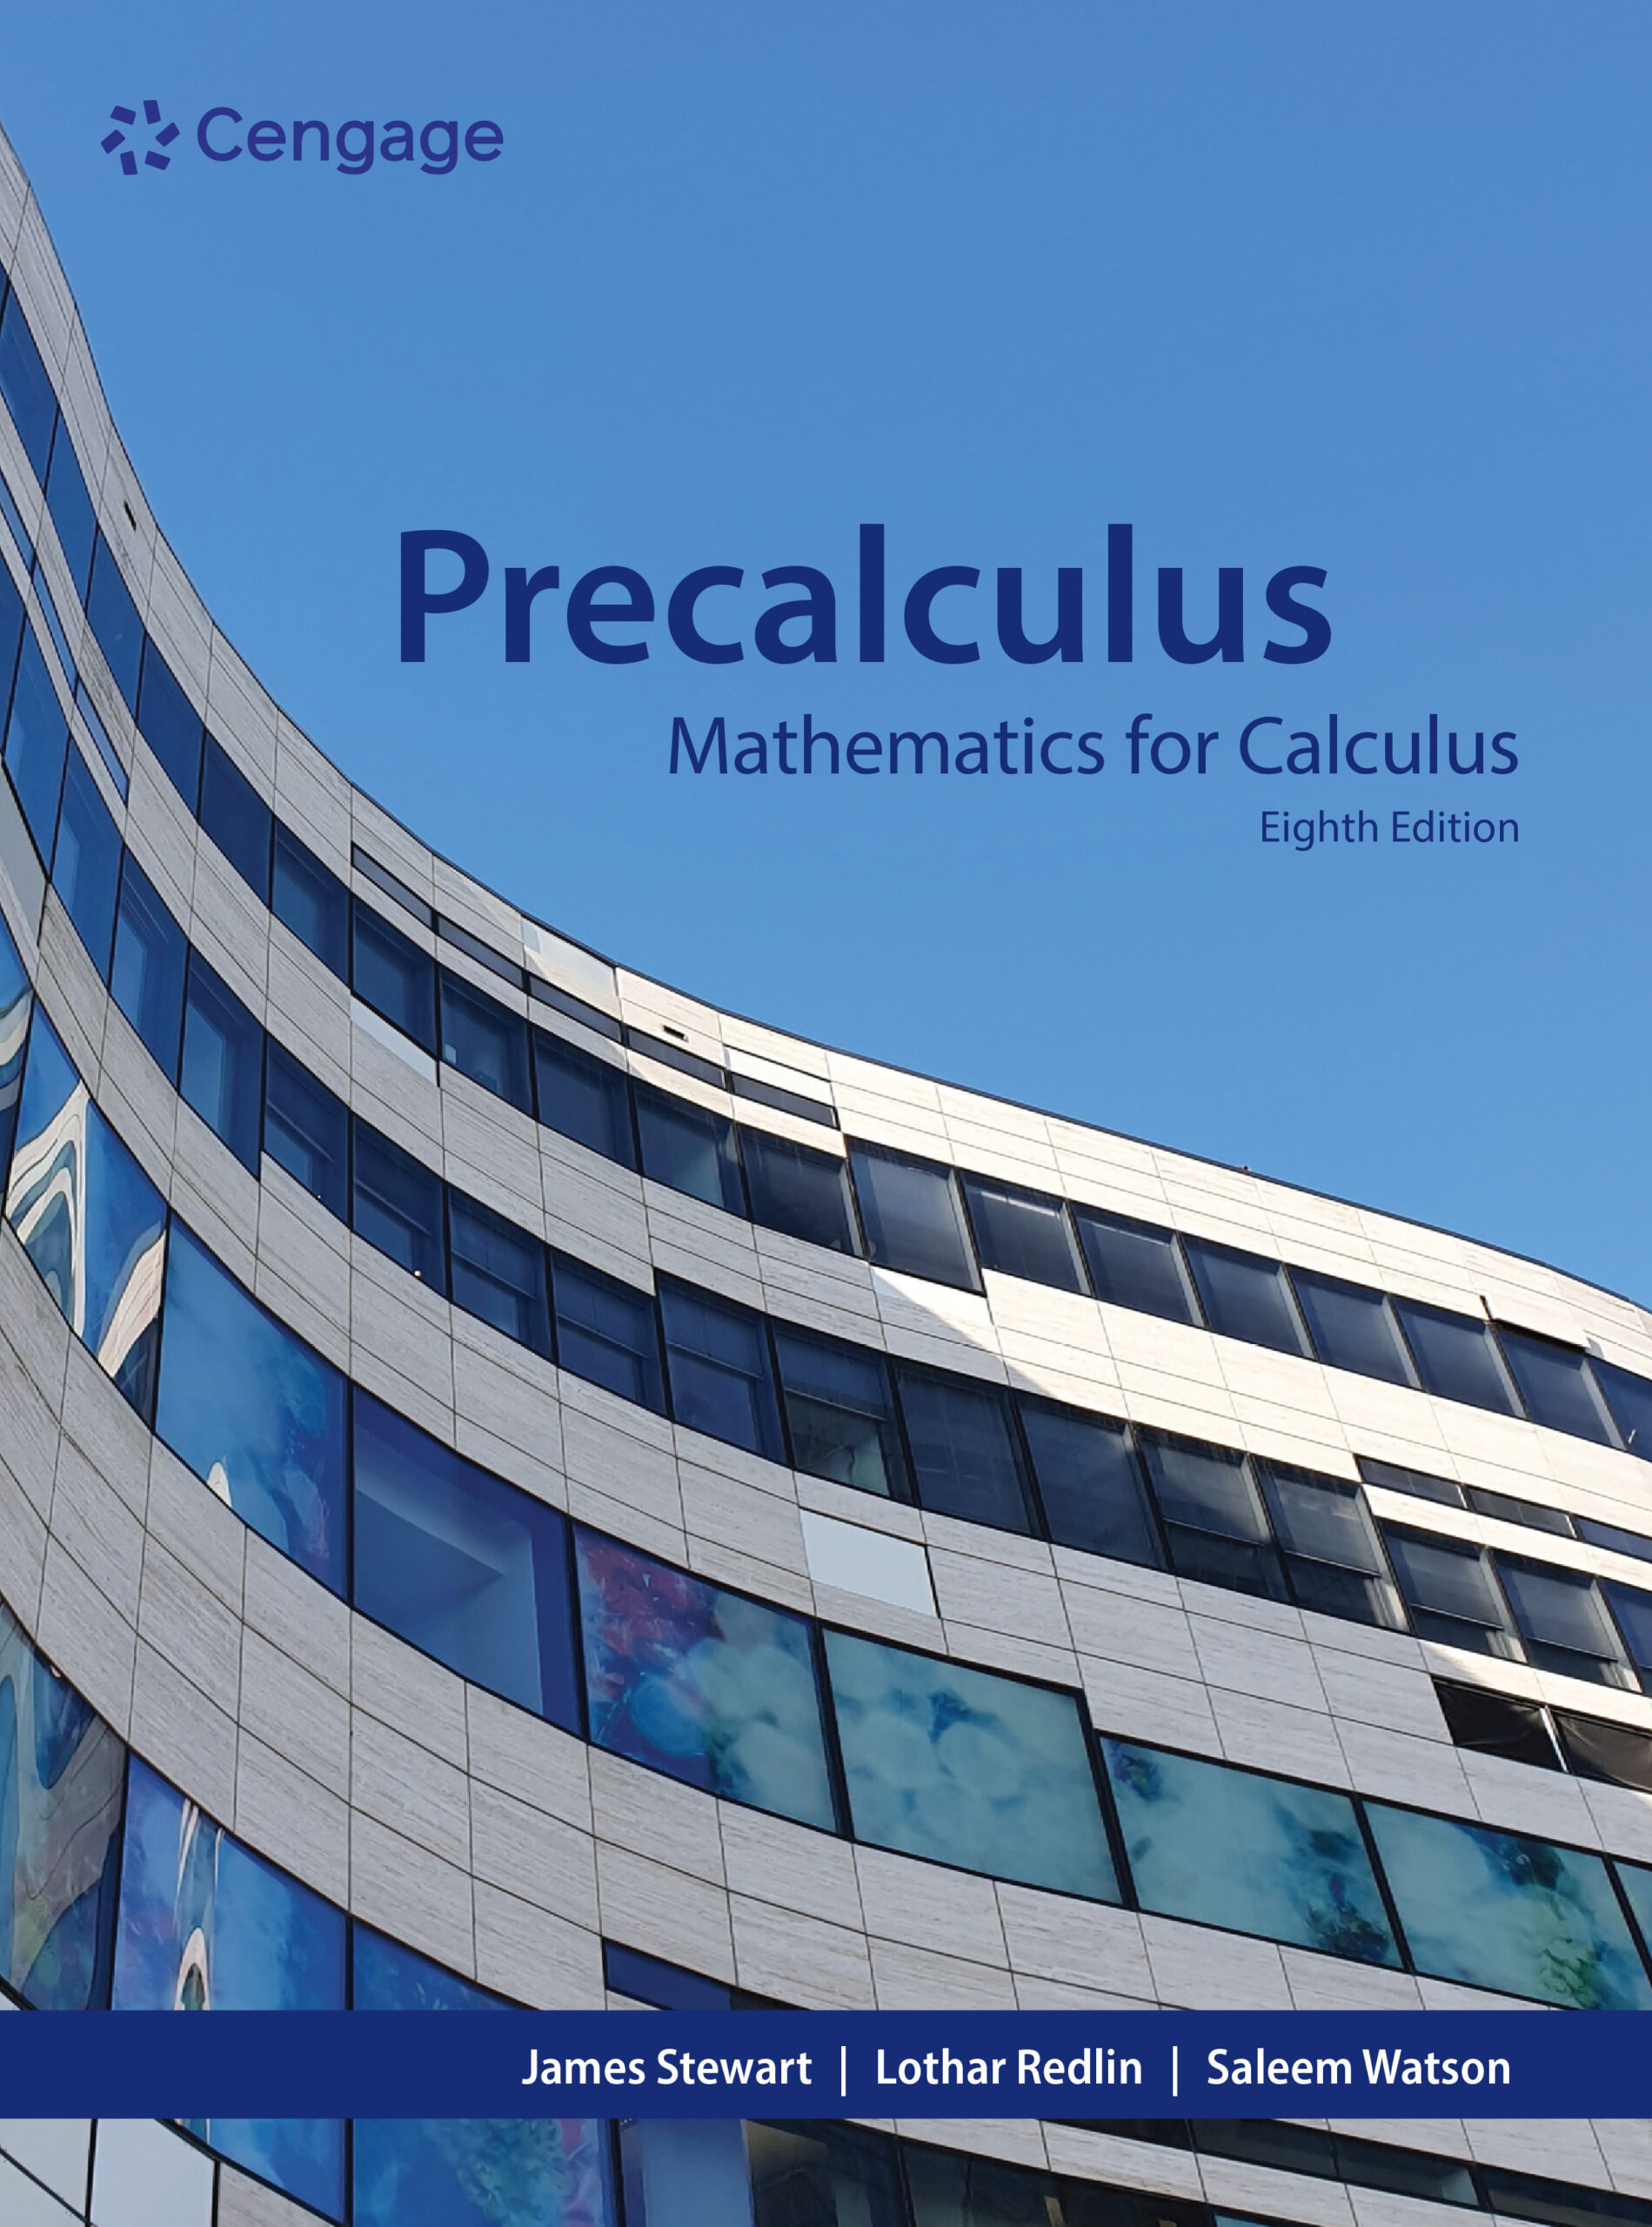 Precalculus: Mathematics for Calculus 8th Ed book cover